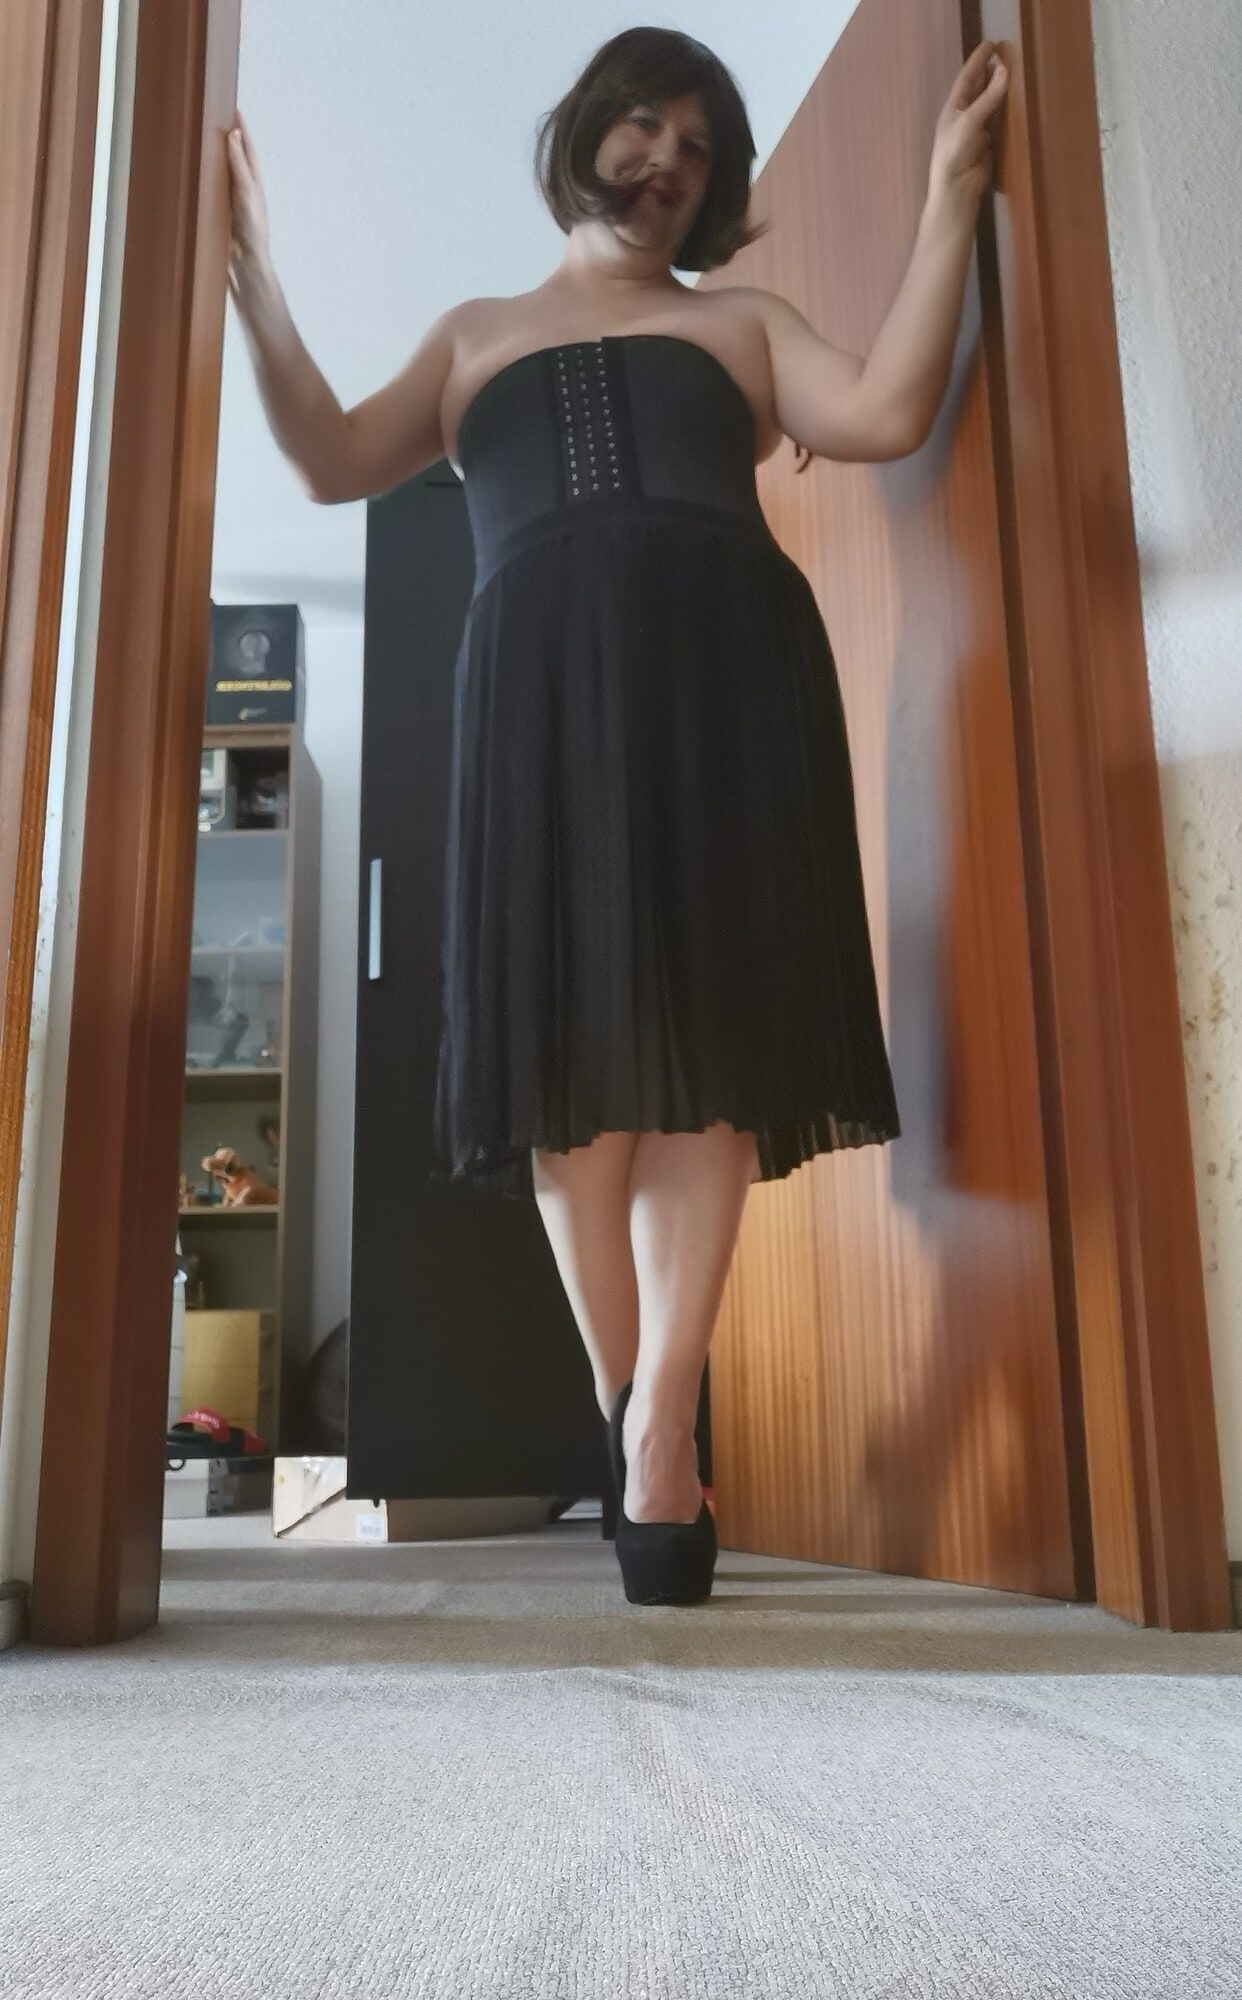 Posing Sexy Wearing Black Skirt, Platform Heels And Wig #4